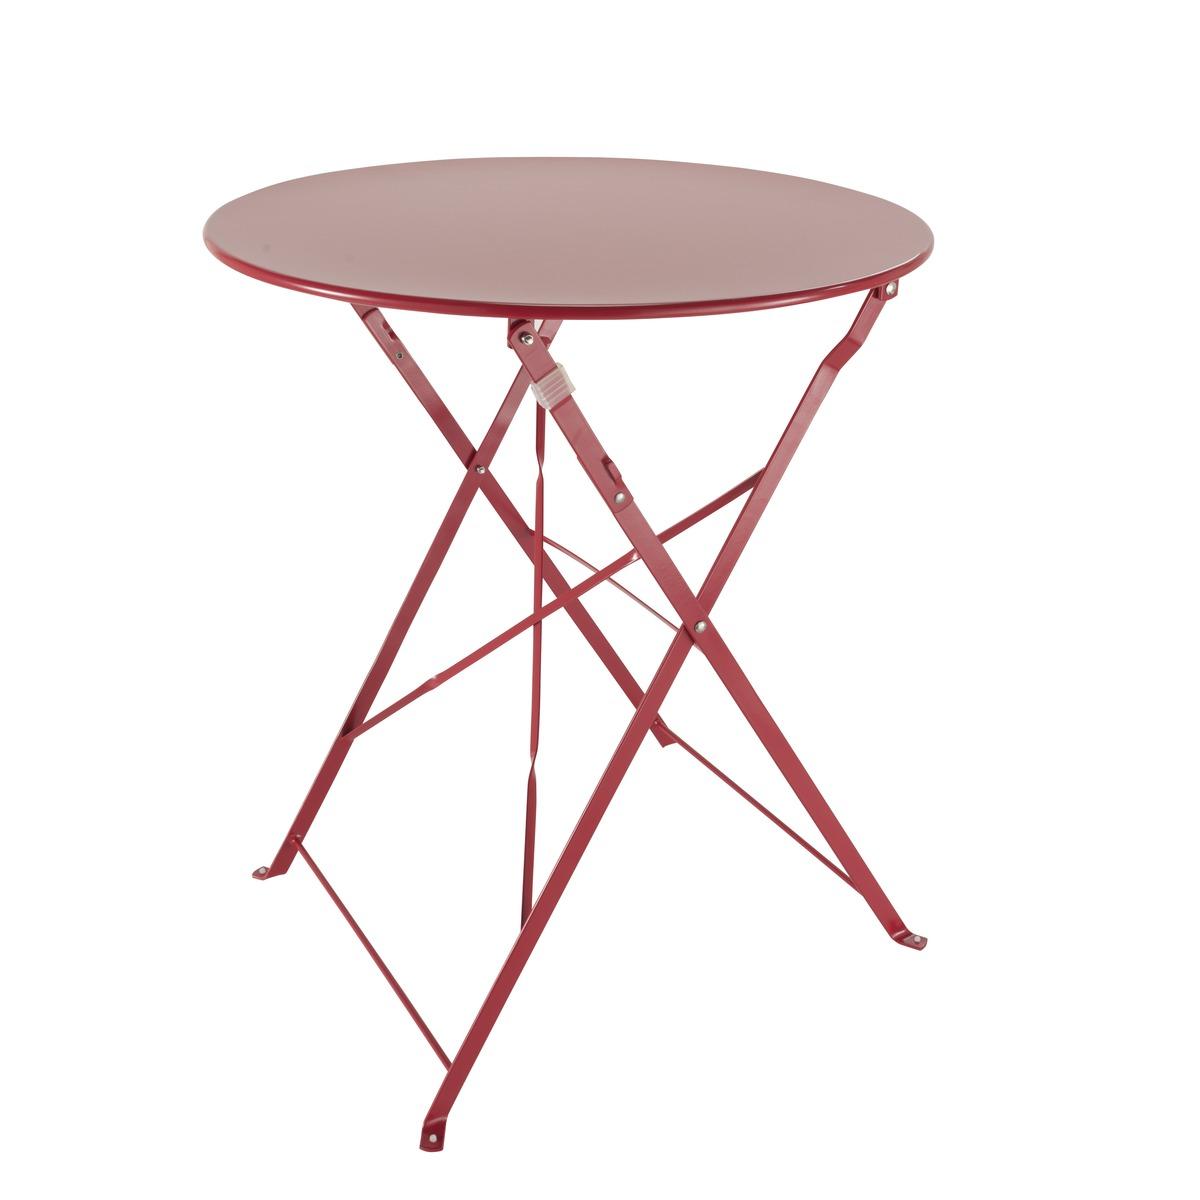 Table Diana pliable - 60 x 60 x H 71 cm - rouge